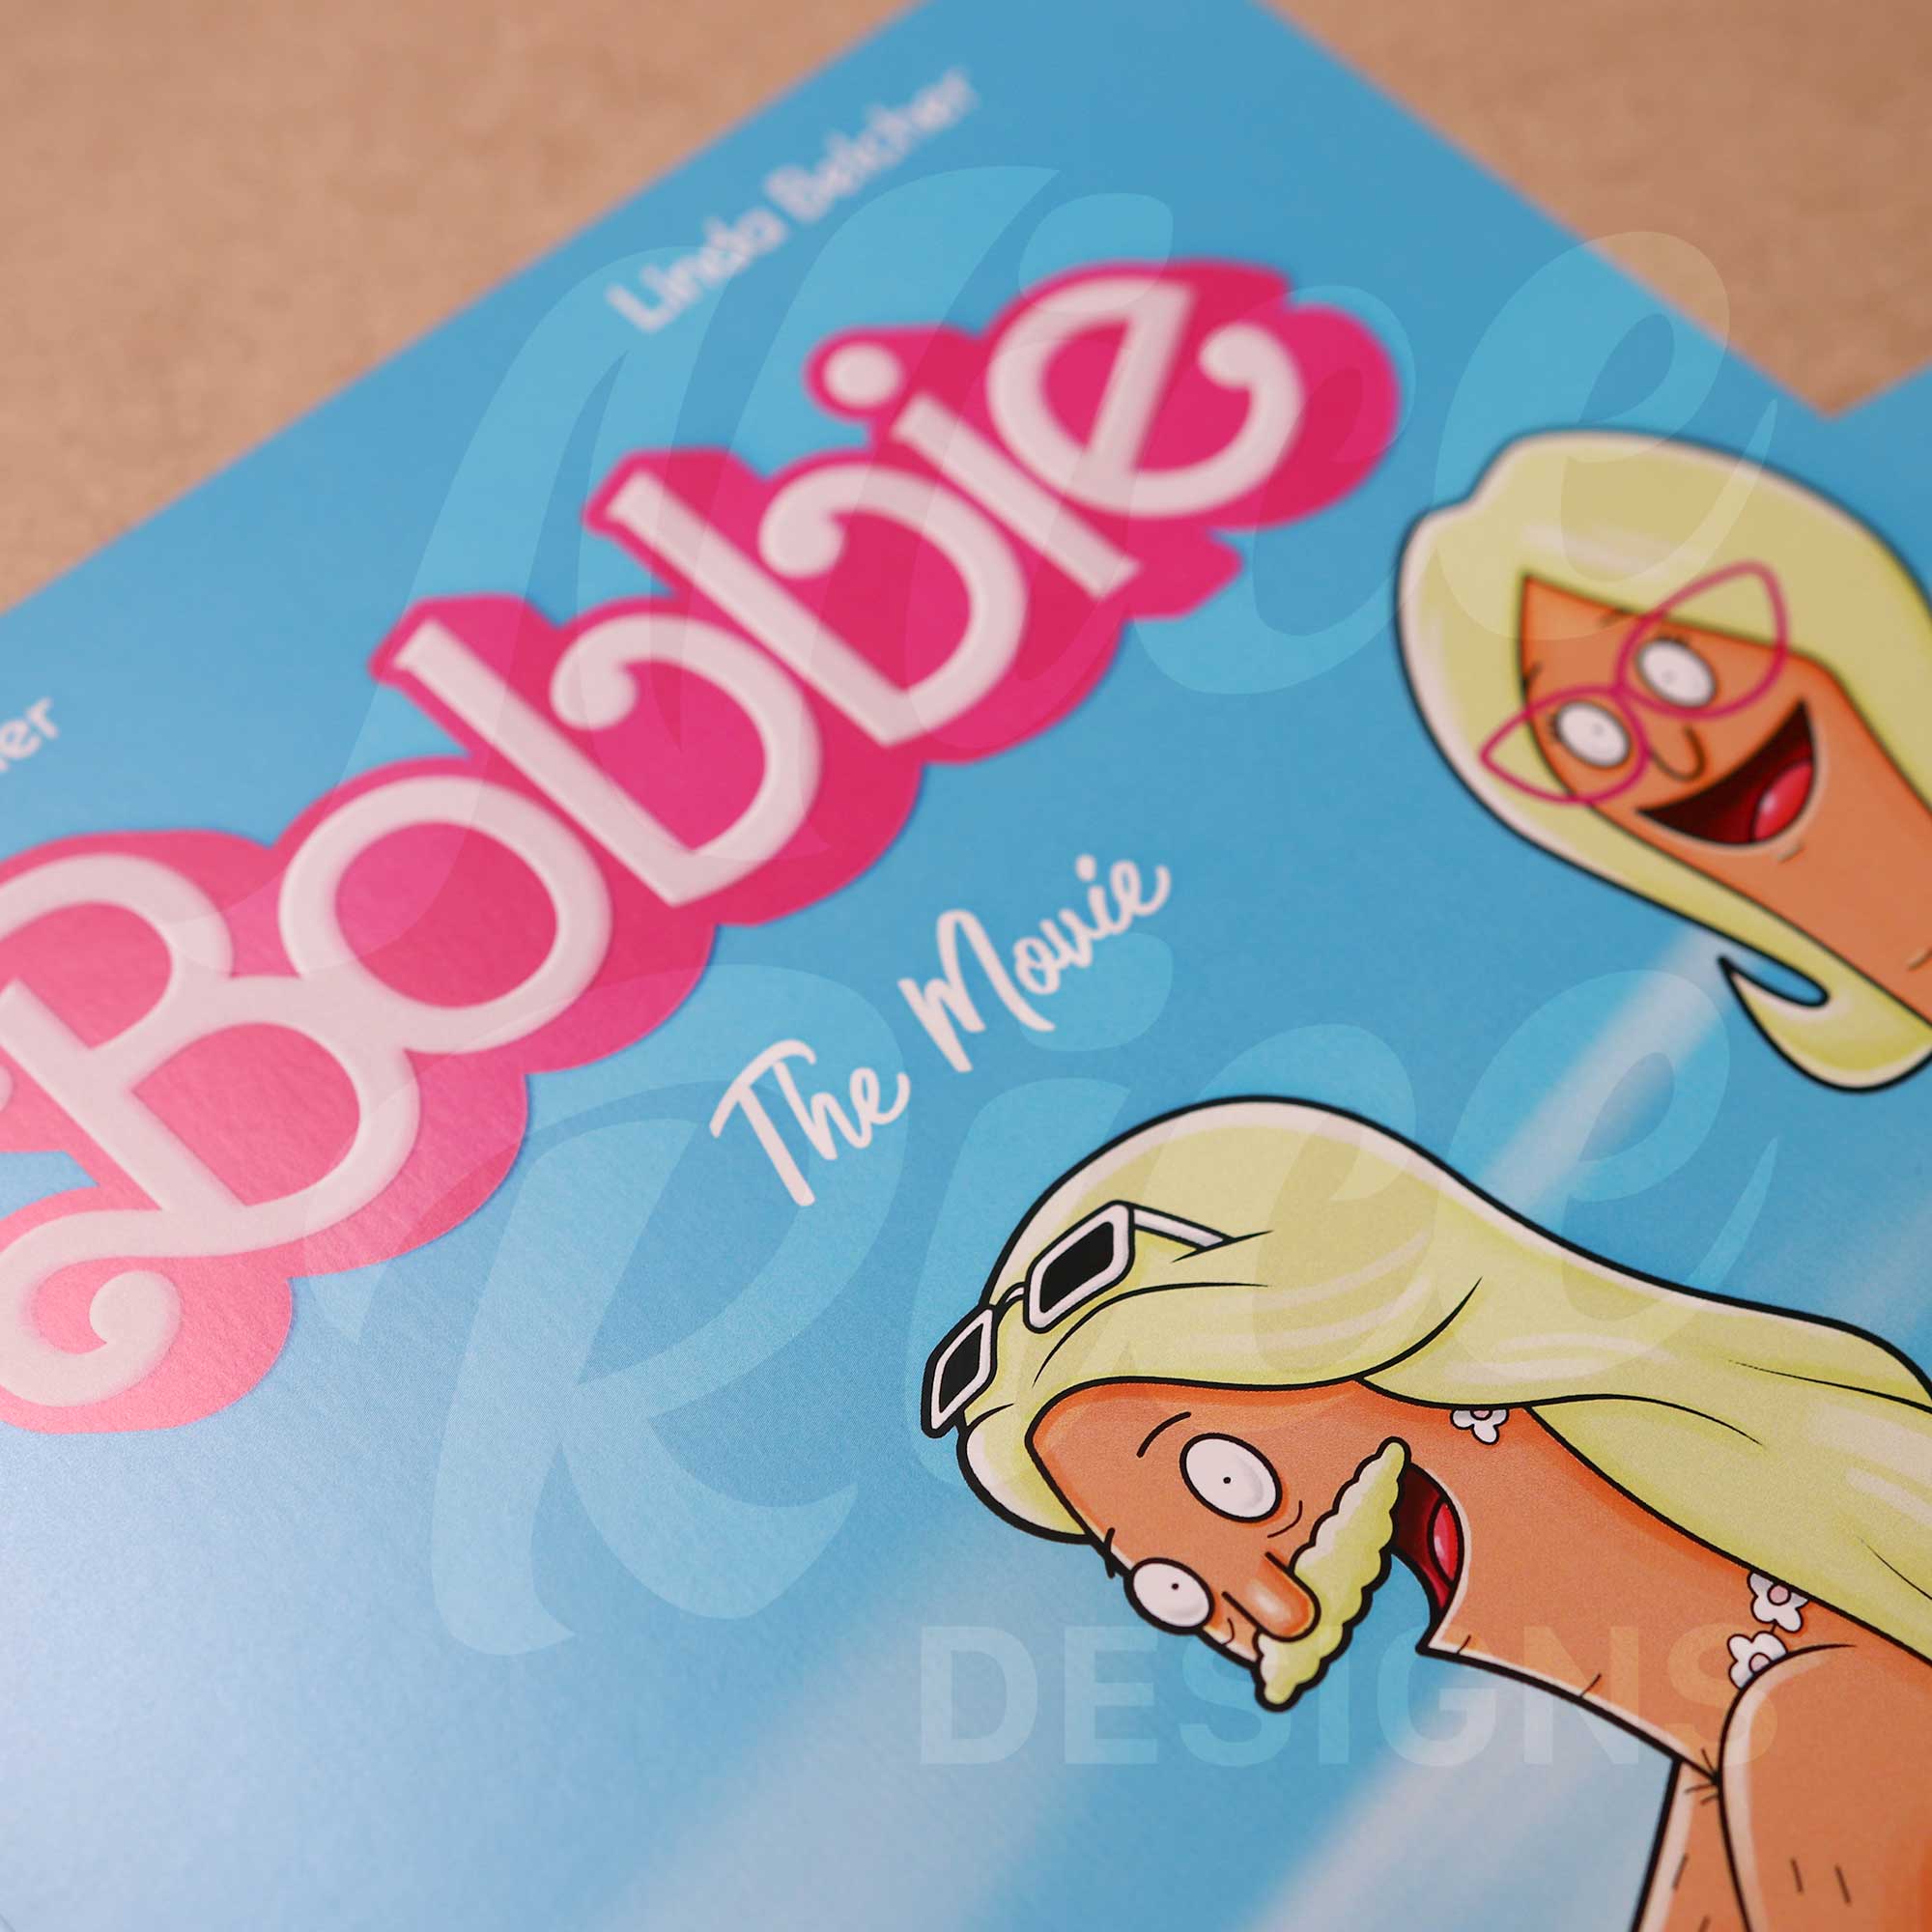 Bobbie Print